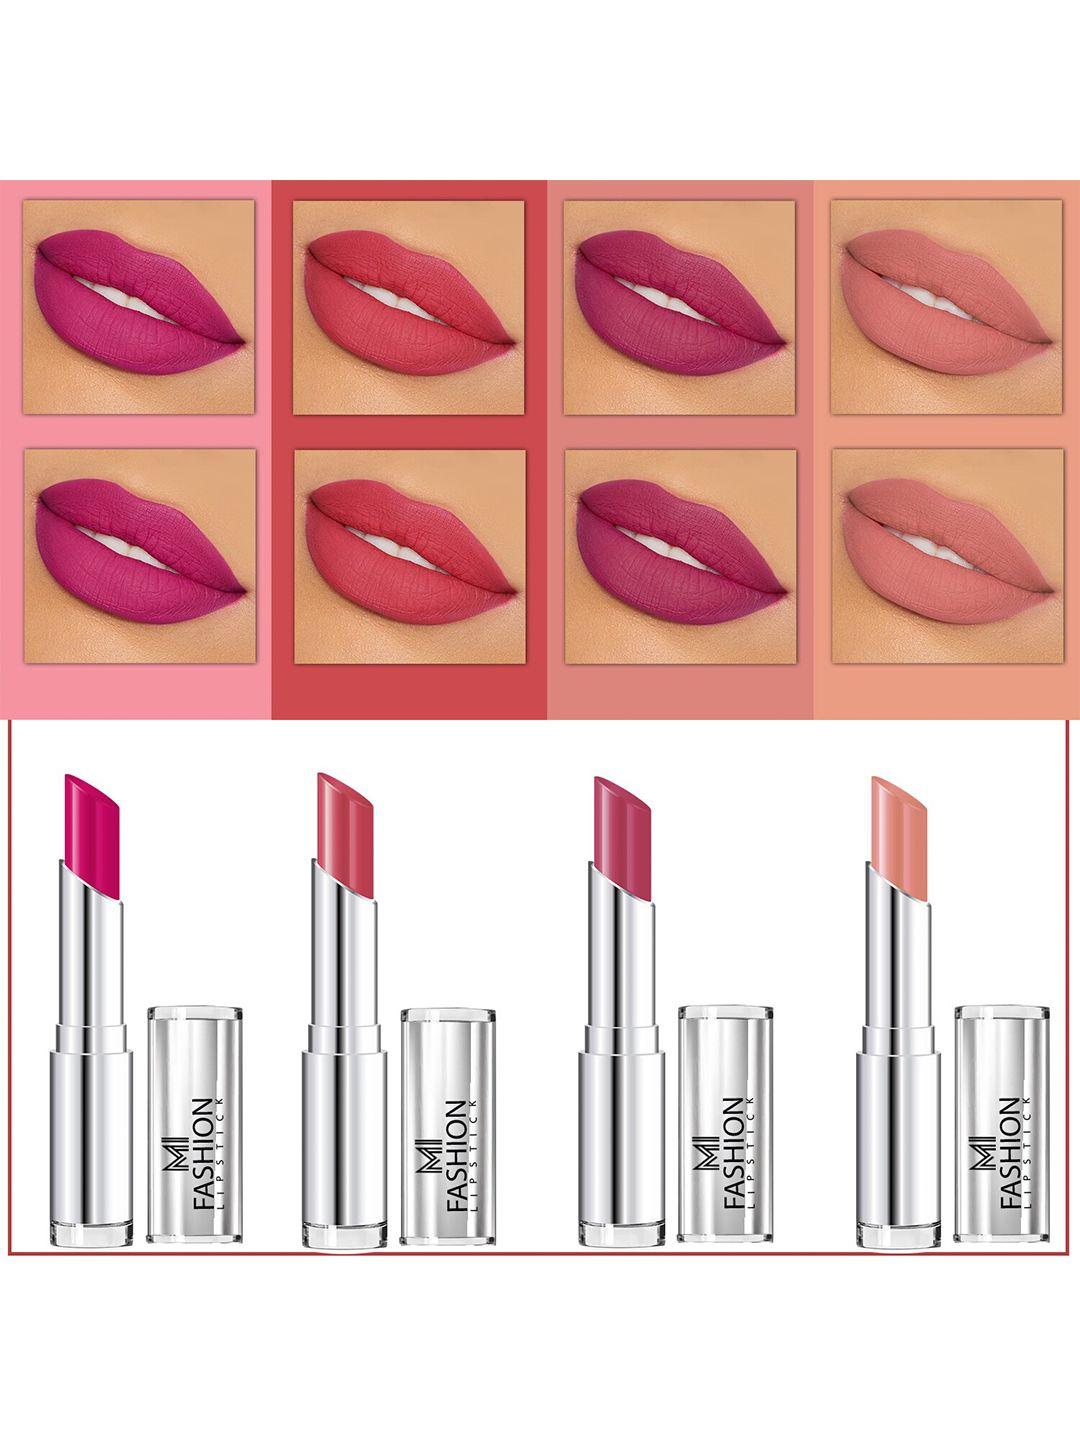 mi fashion set of 4 creme matte weightless long-lasting lipstick 3.5g each - magenta + rose + purple peach + nude